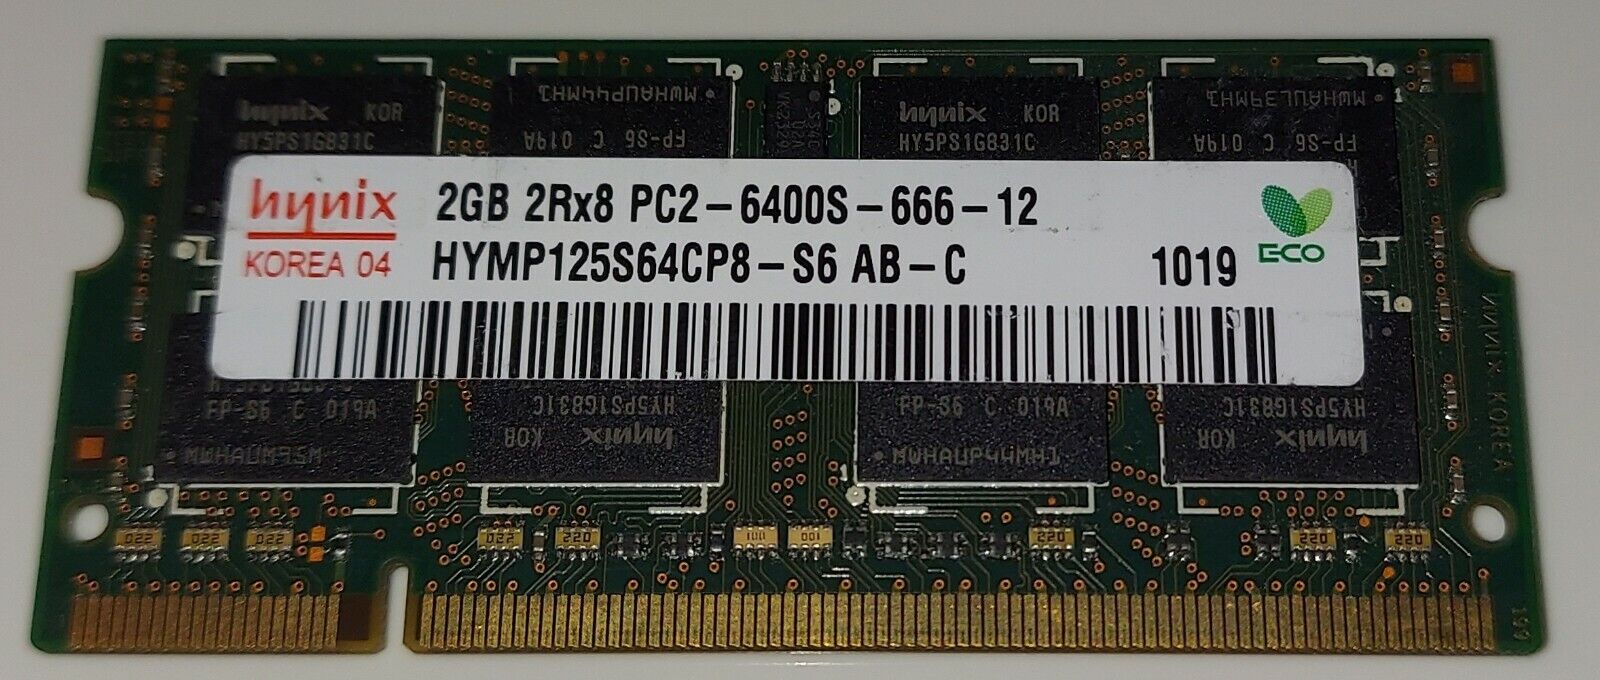 HYNIX 2GB 2Rx8 PC2-6400S-666-12 HYMP125S64CP8-S6 AB-C